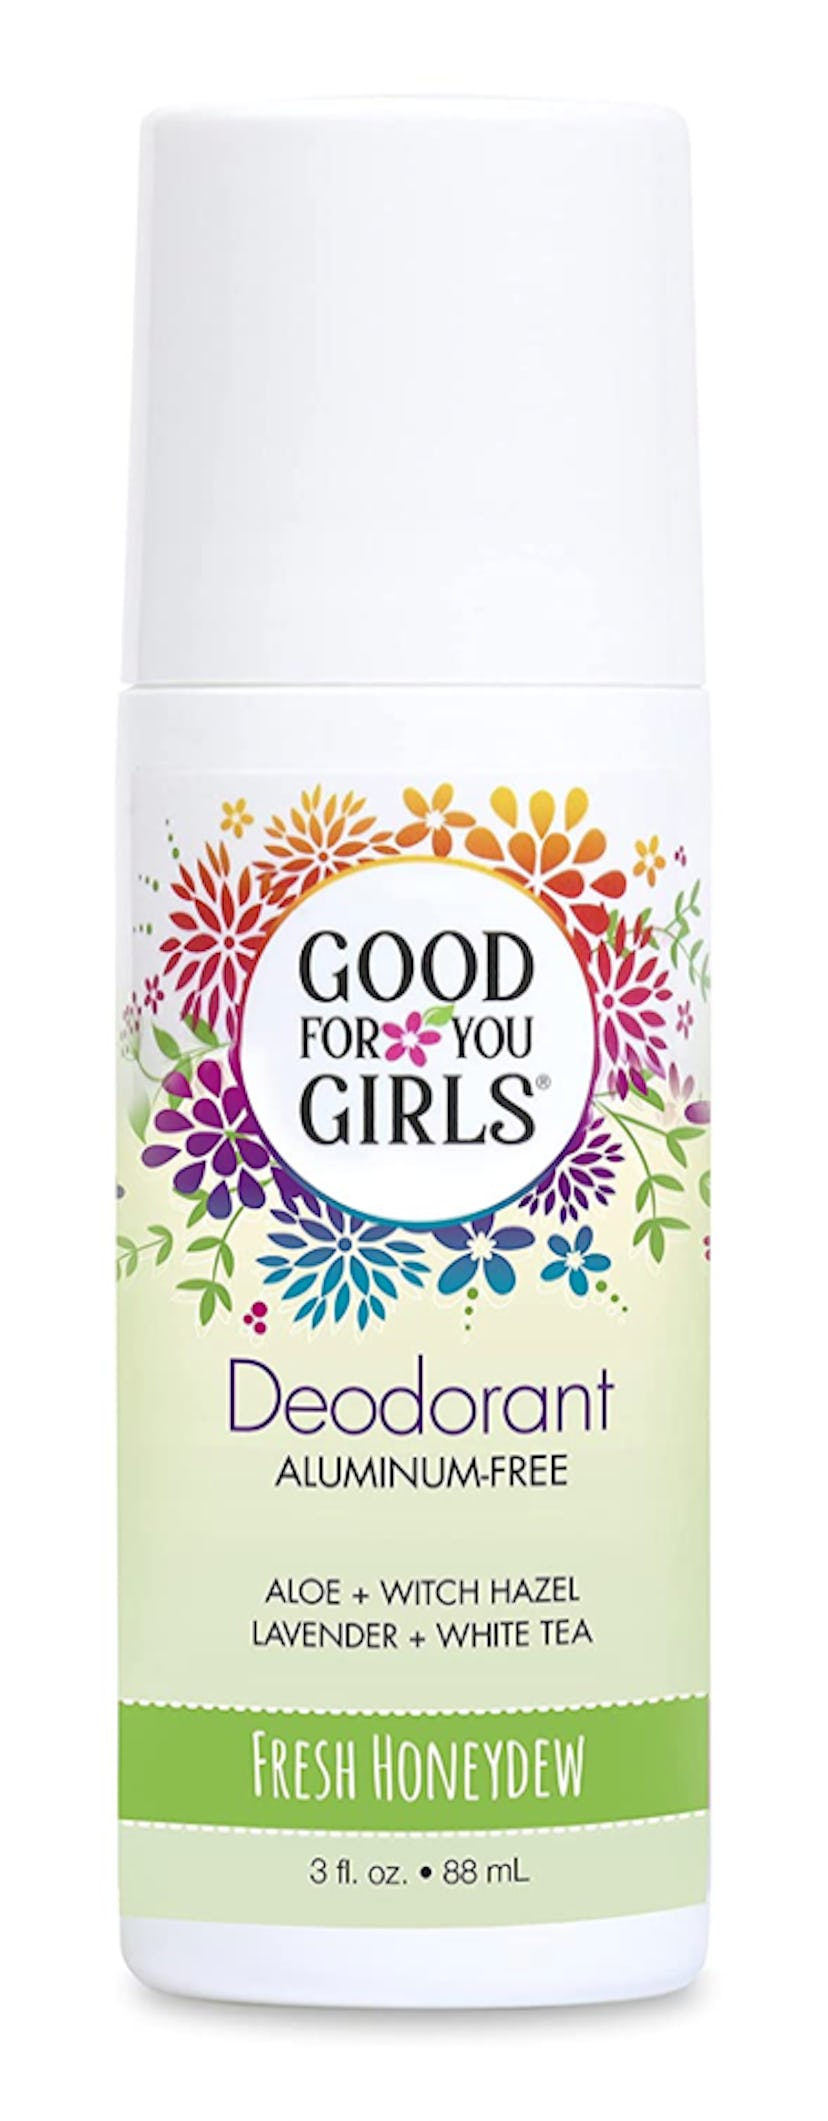 Good For You Girls Deodorant, Fresh Honeydew Best Deodorant For Kids